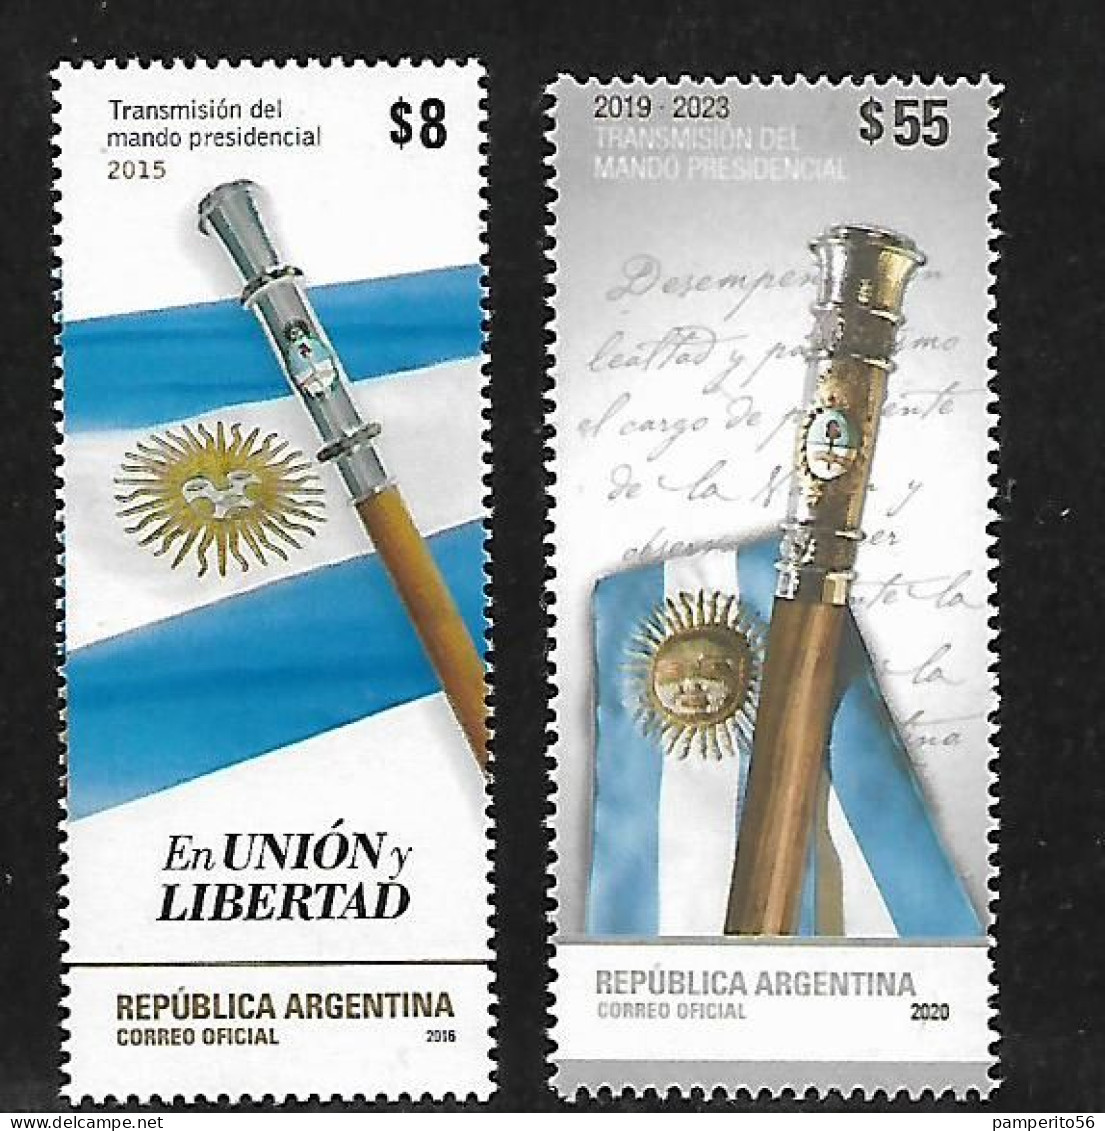 ARGENTINA - AÑO 2016 - 2020 - TRANSMISION DEL MANDO PRESIDENCIAL - *MNH* - Unused Stamps